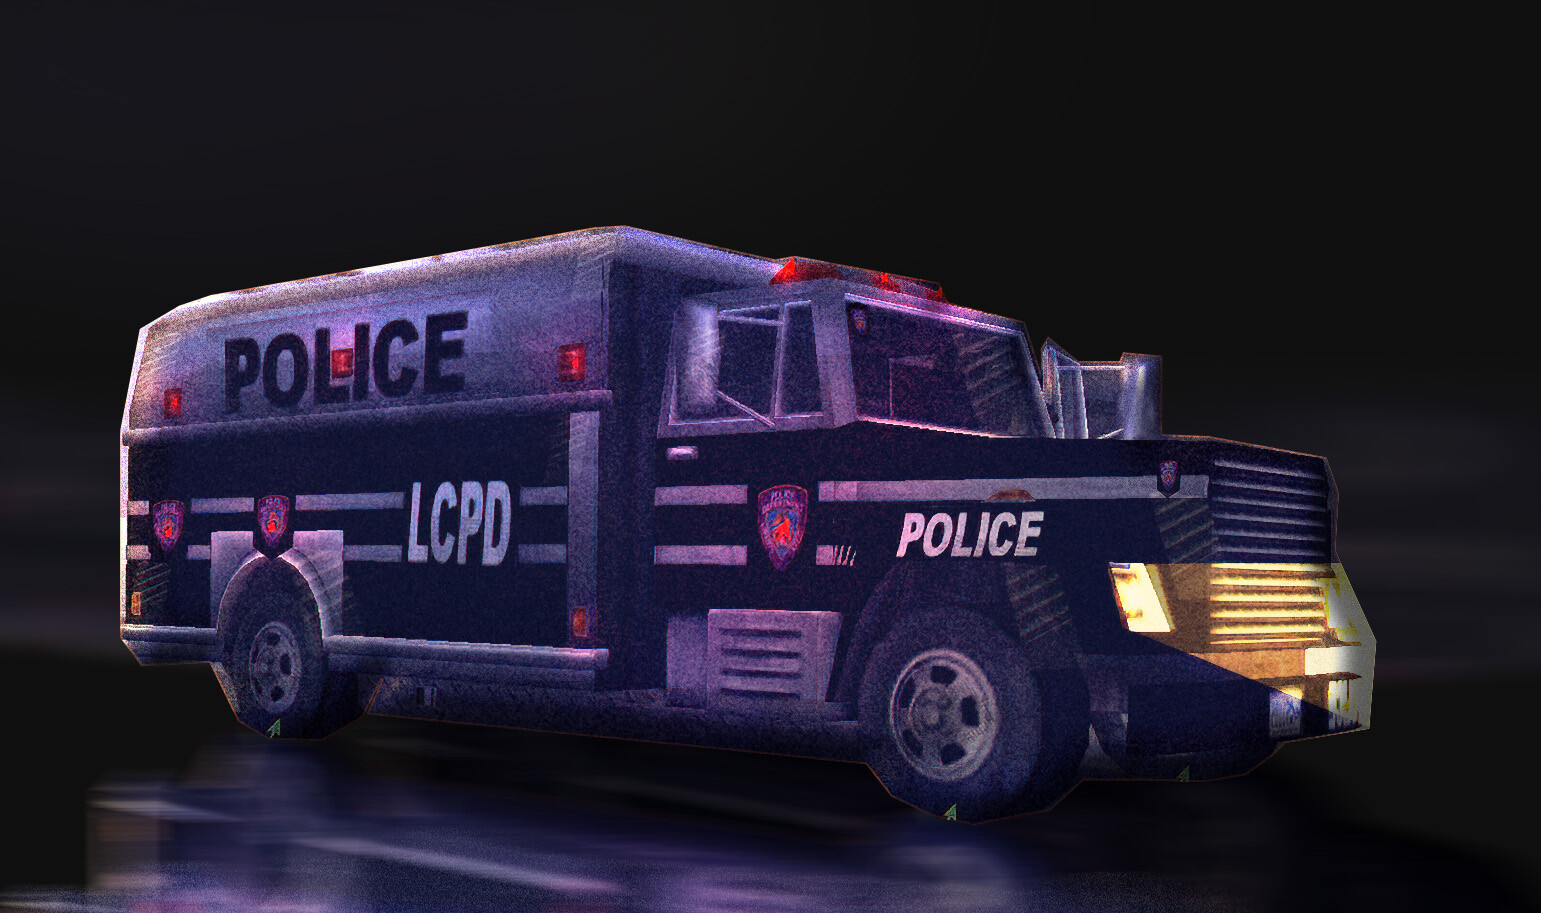 POLICE SUV